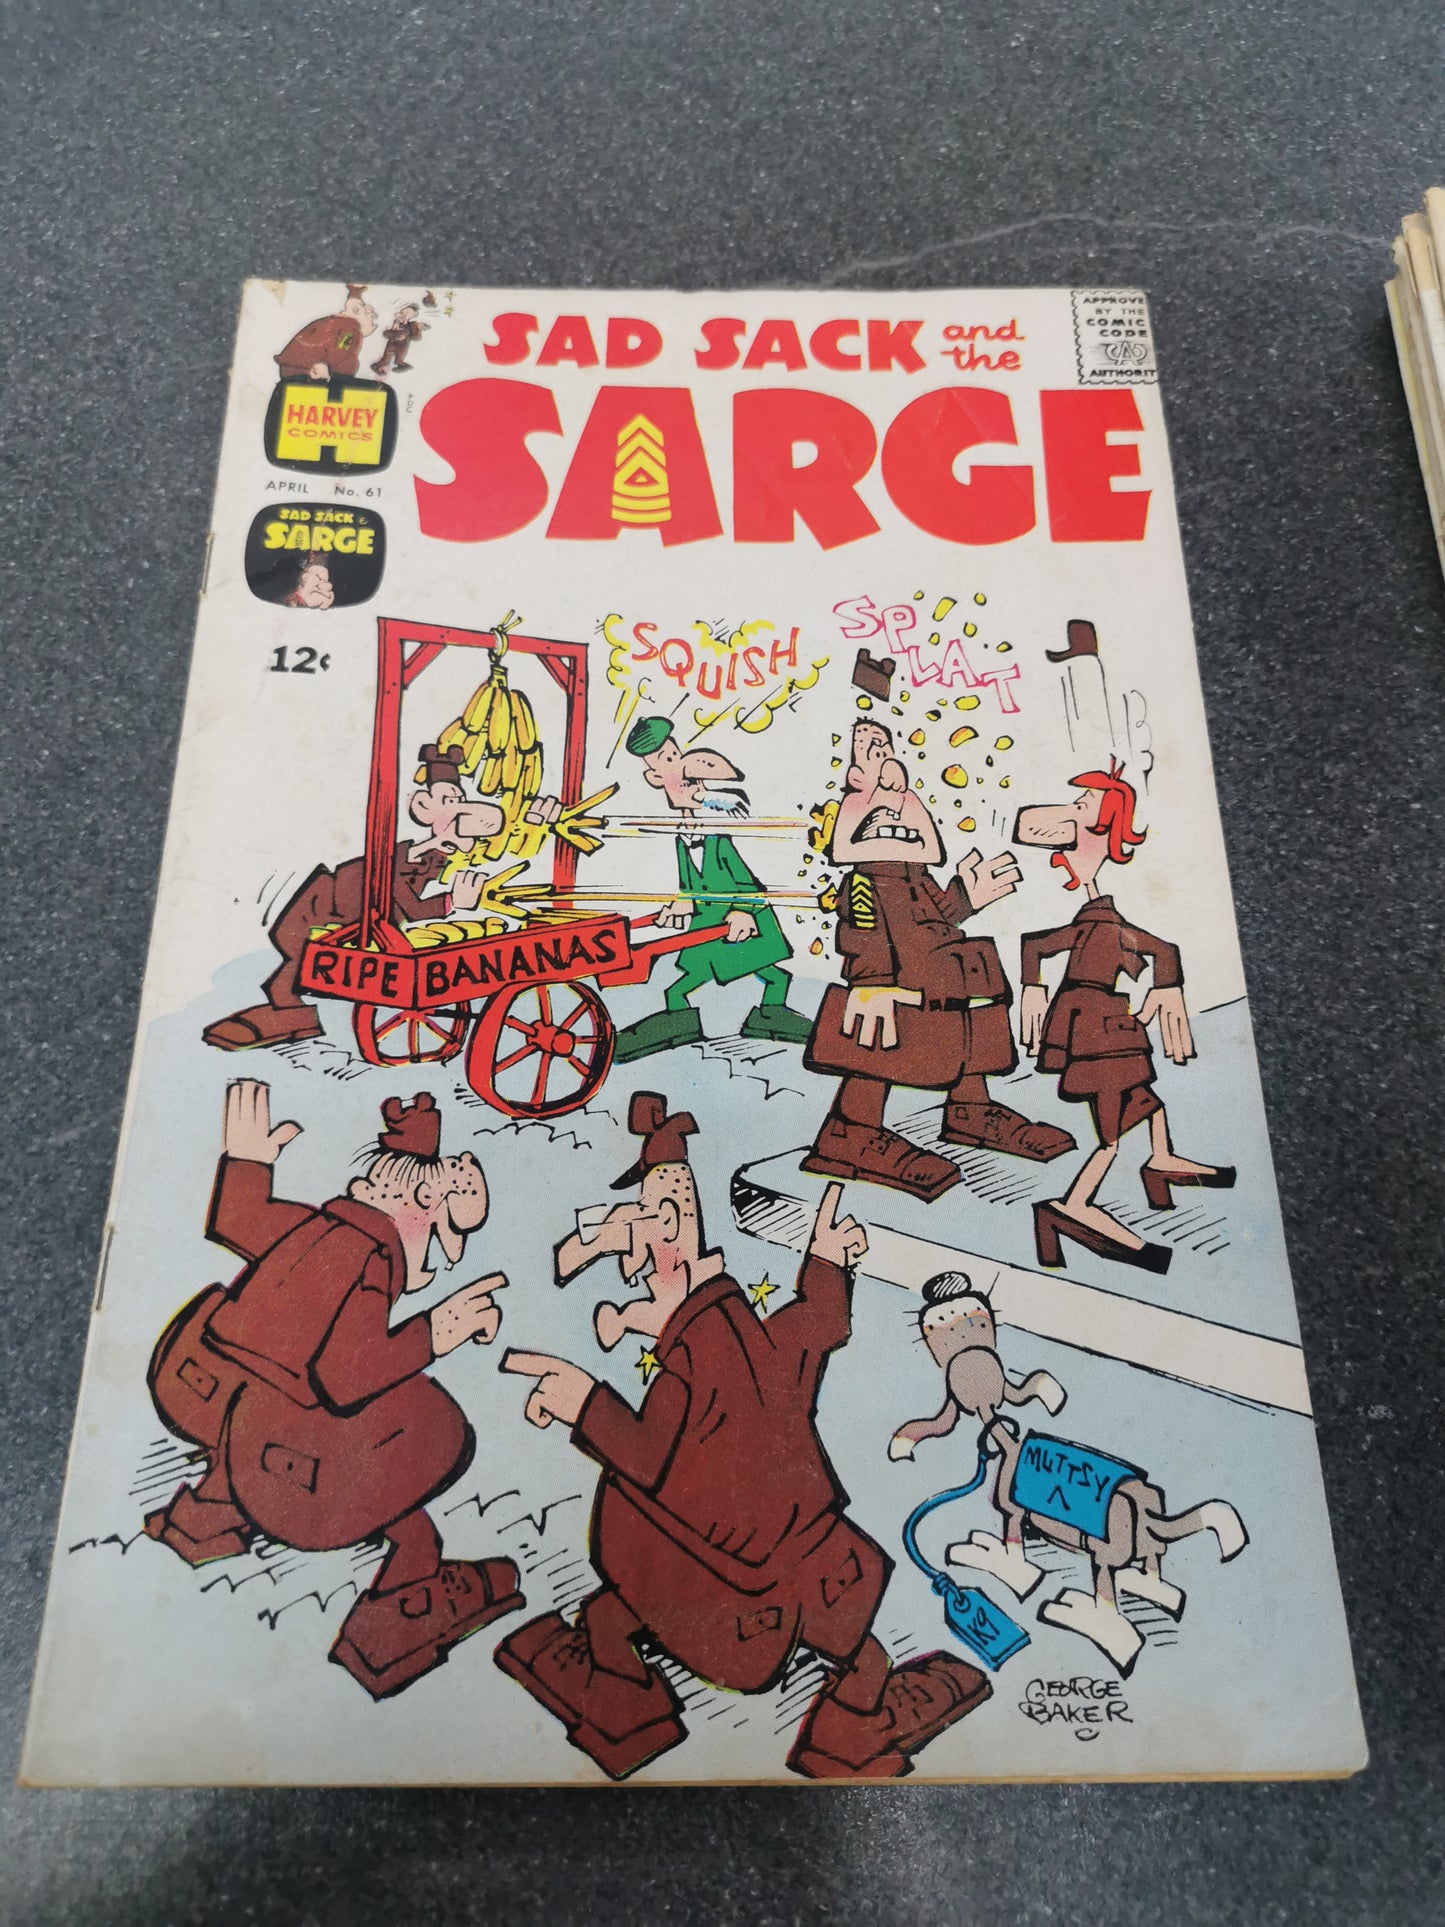 Sad Sack and The Sarge #61 1967 Harvey Publications comics